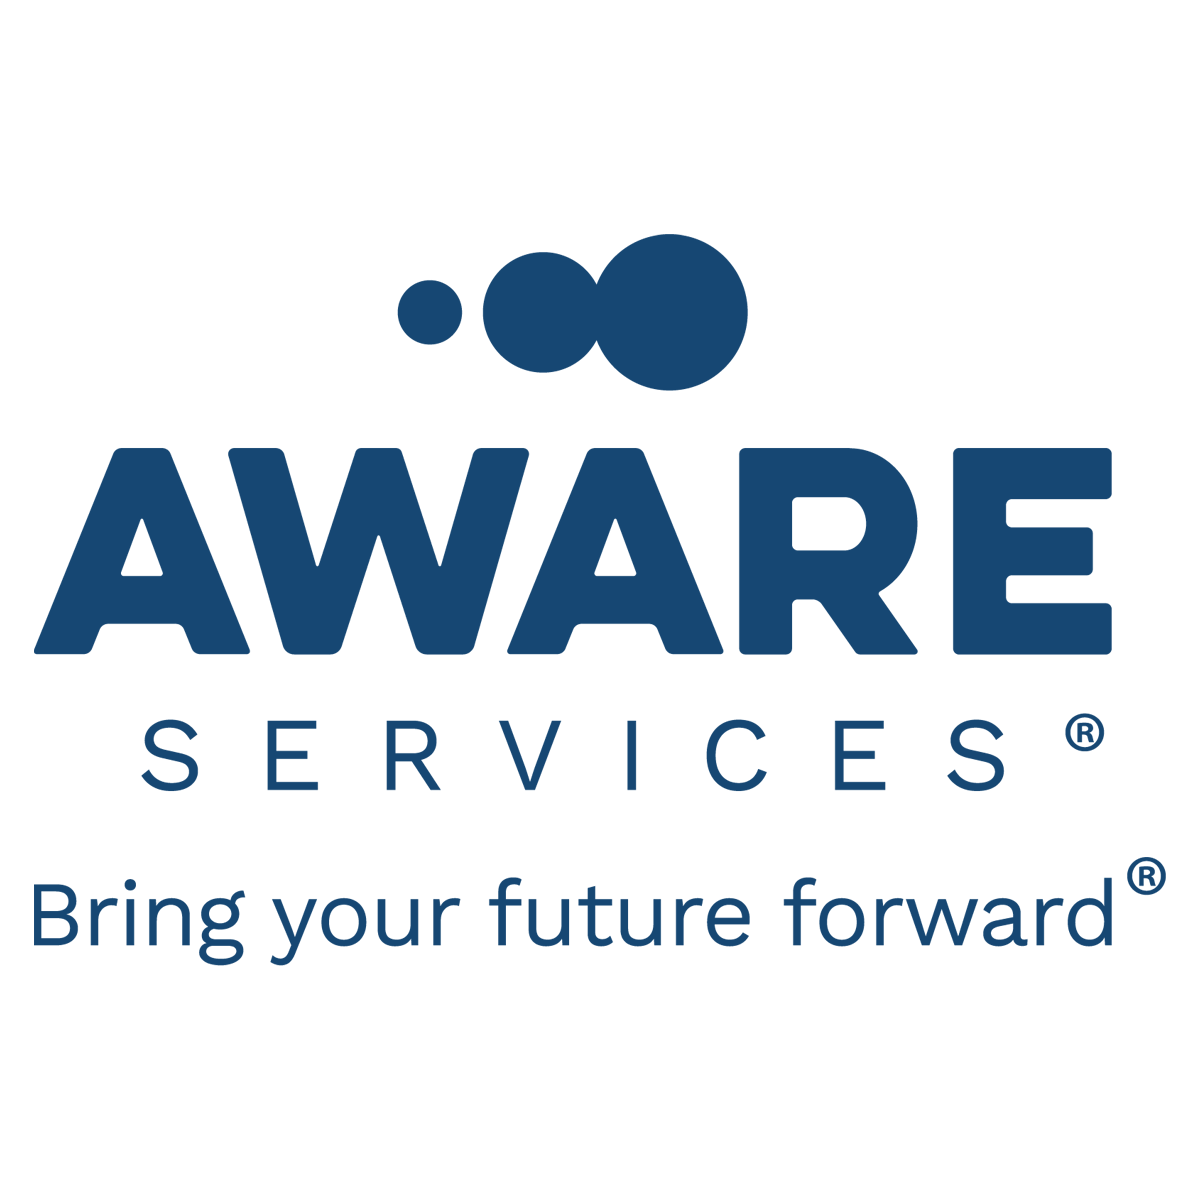 Aware Services